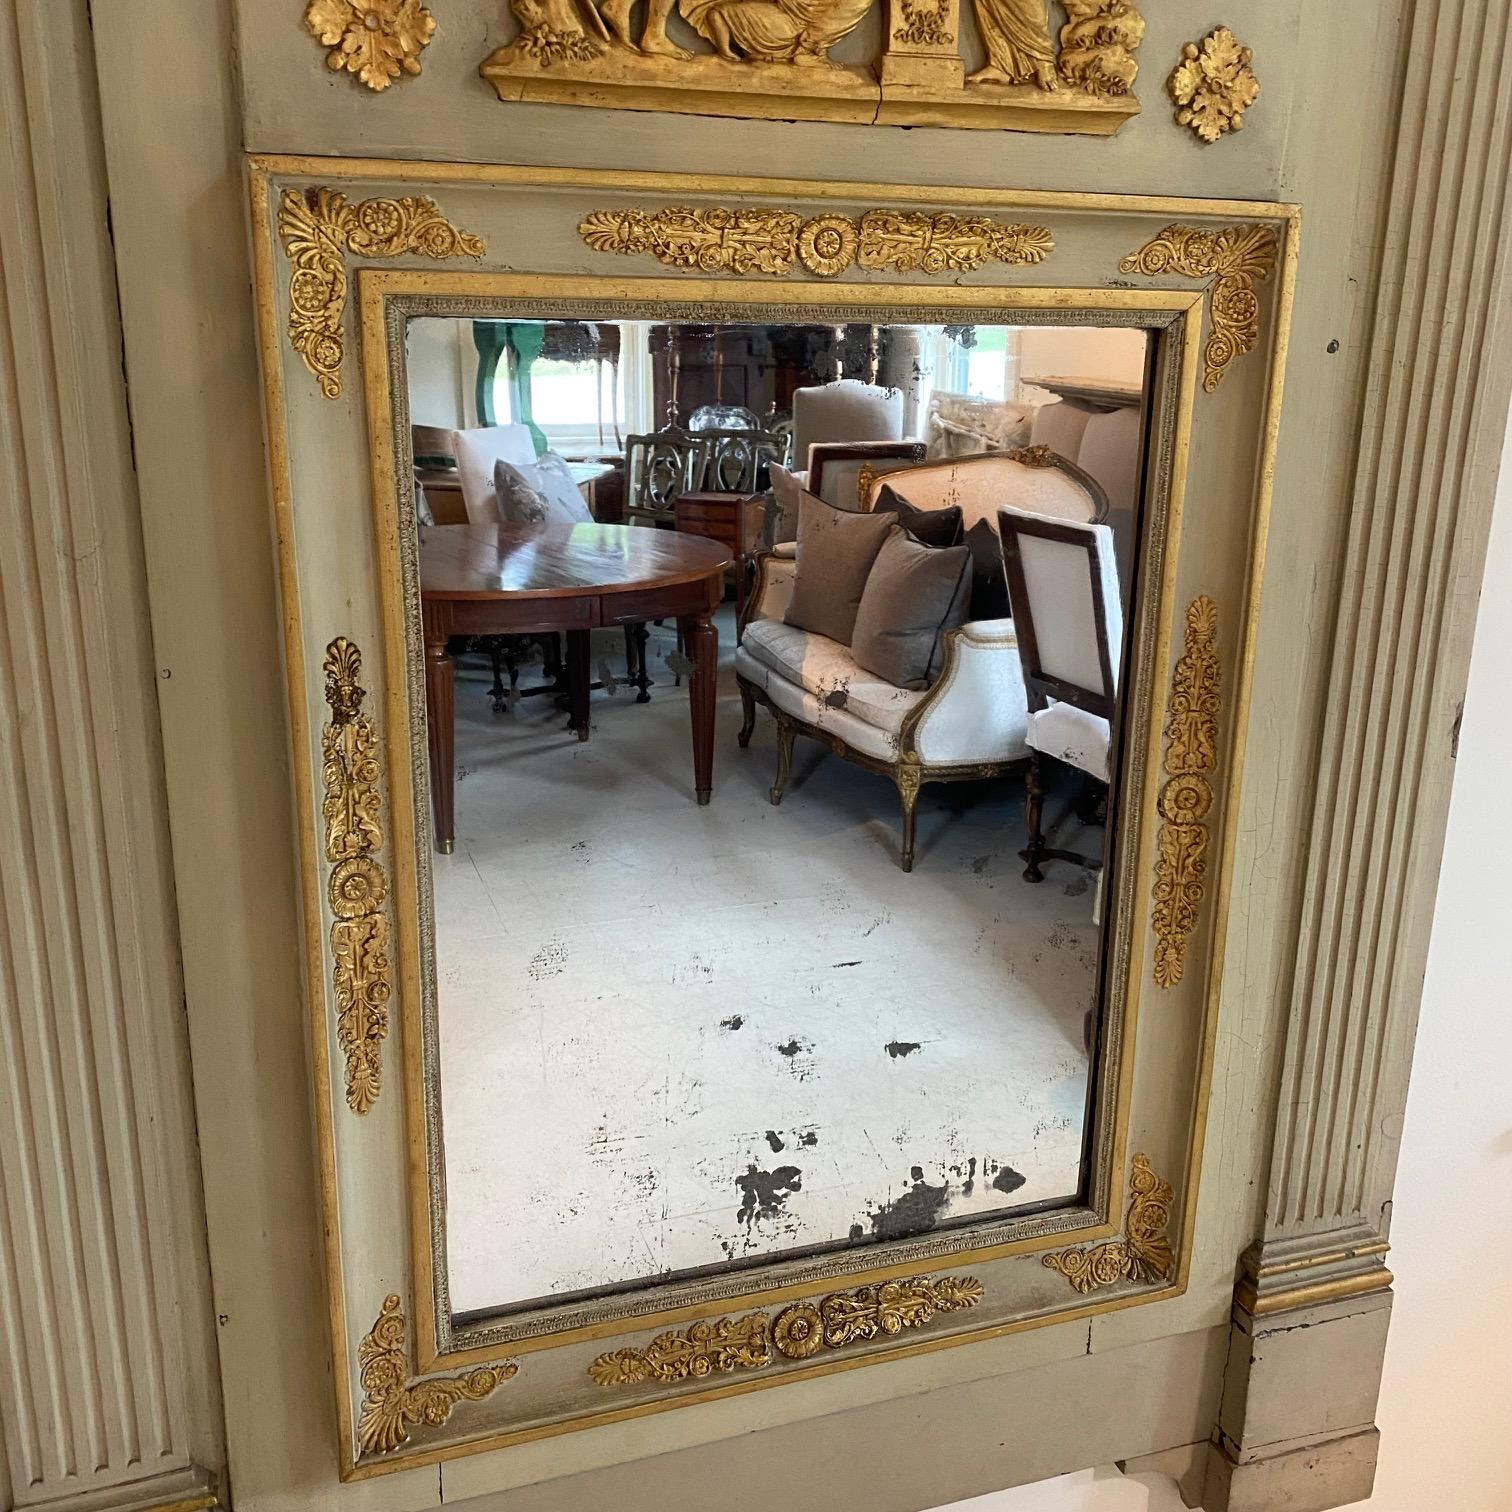 Louis XVI period trumeau mirror with celadon painted frame and figural pastoral scene in original gold gilt, circa 1800. Original mercury glass mirror.
Inside mirror 25.5 H 19 W
#5842.